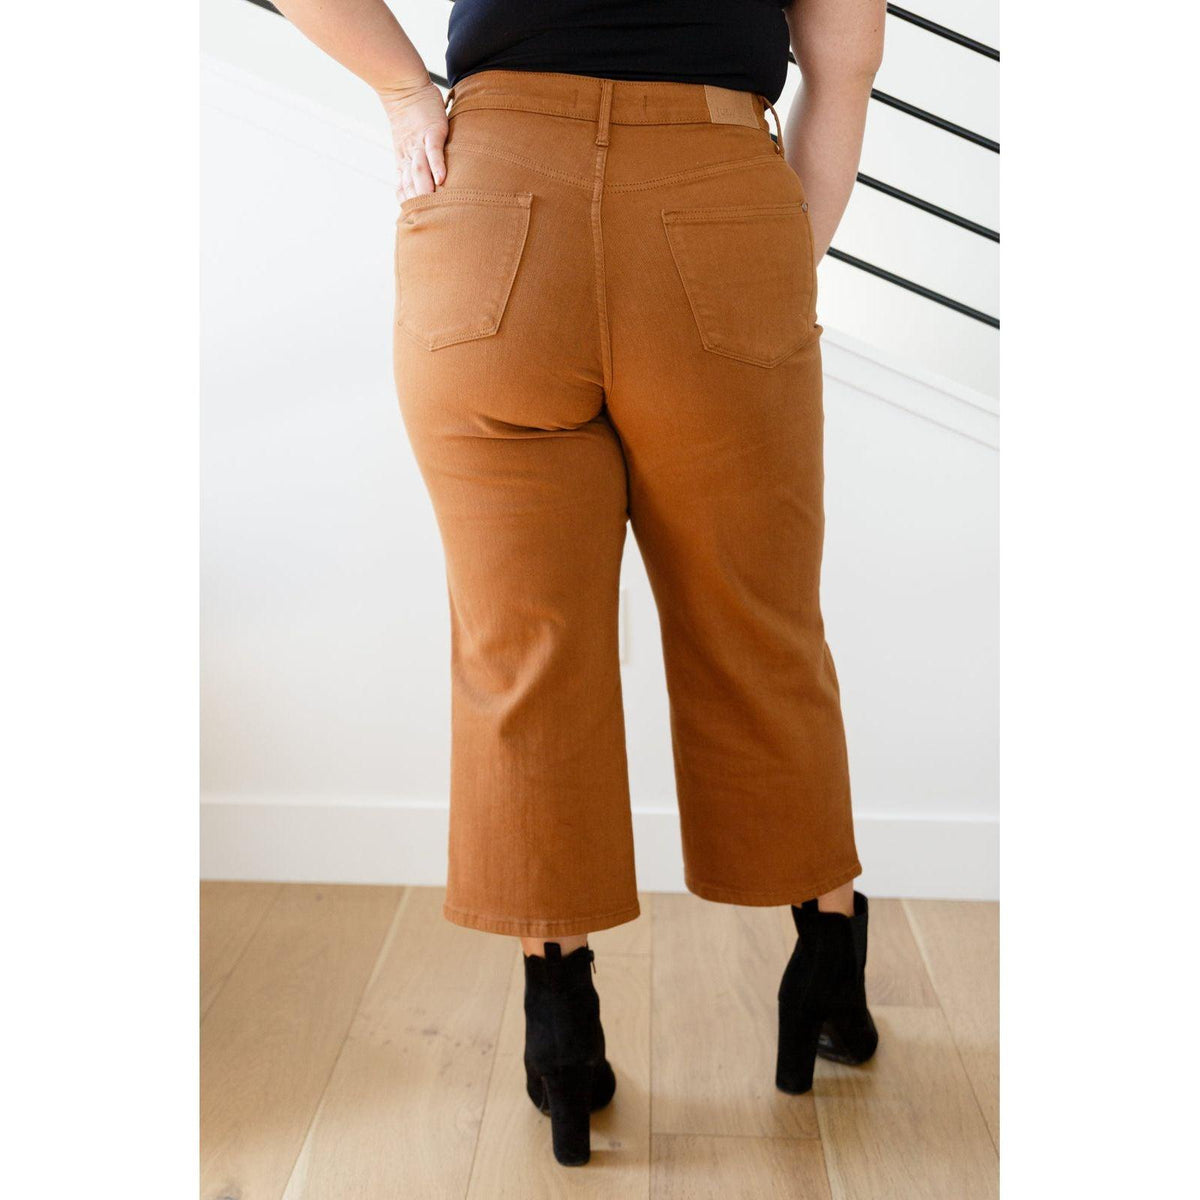 Judy Blue | Briar High Rise Control Top Wide Leg Crop Jeans in Camel - becauseofadi